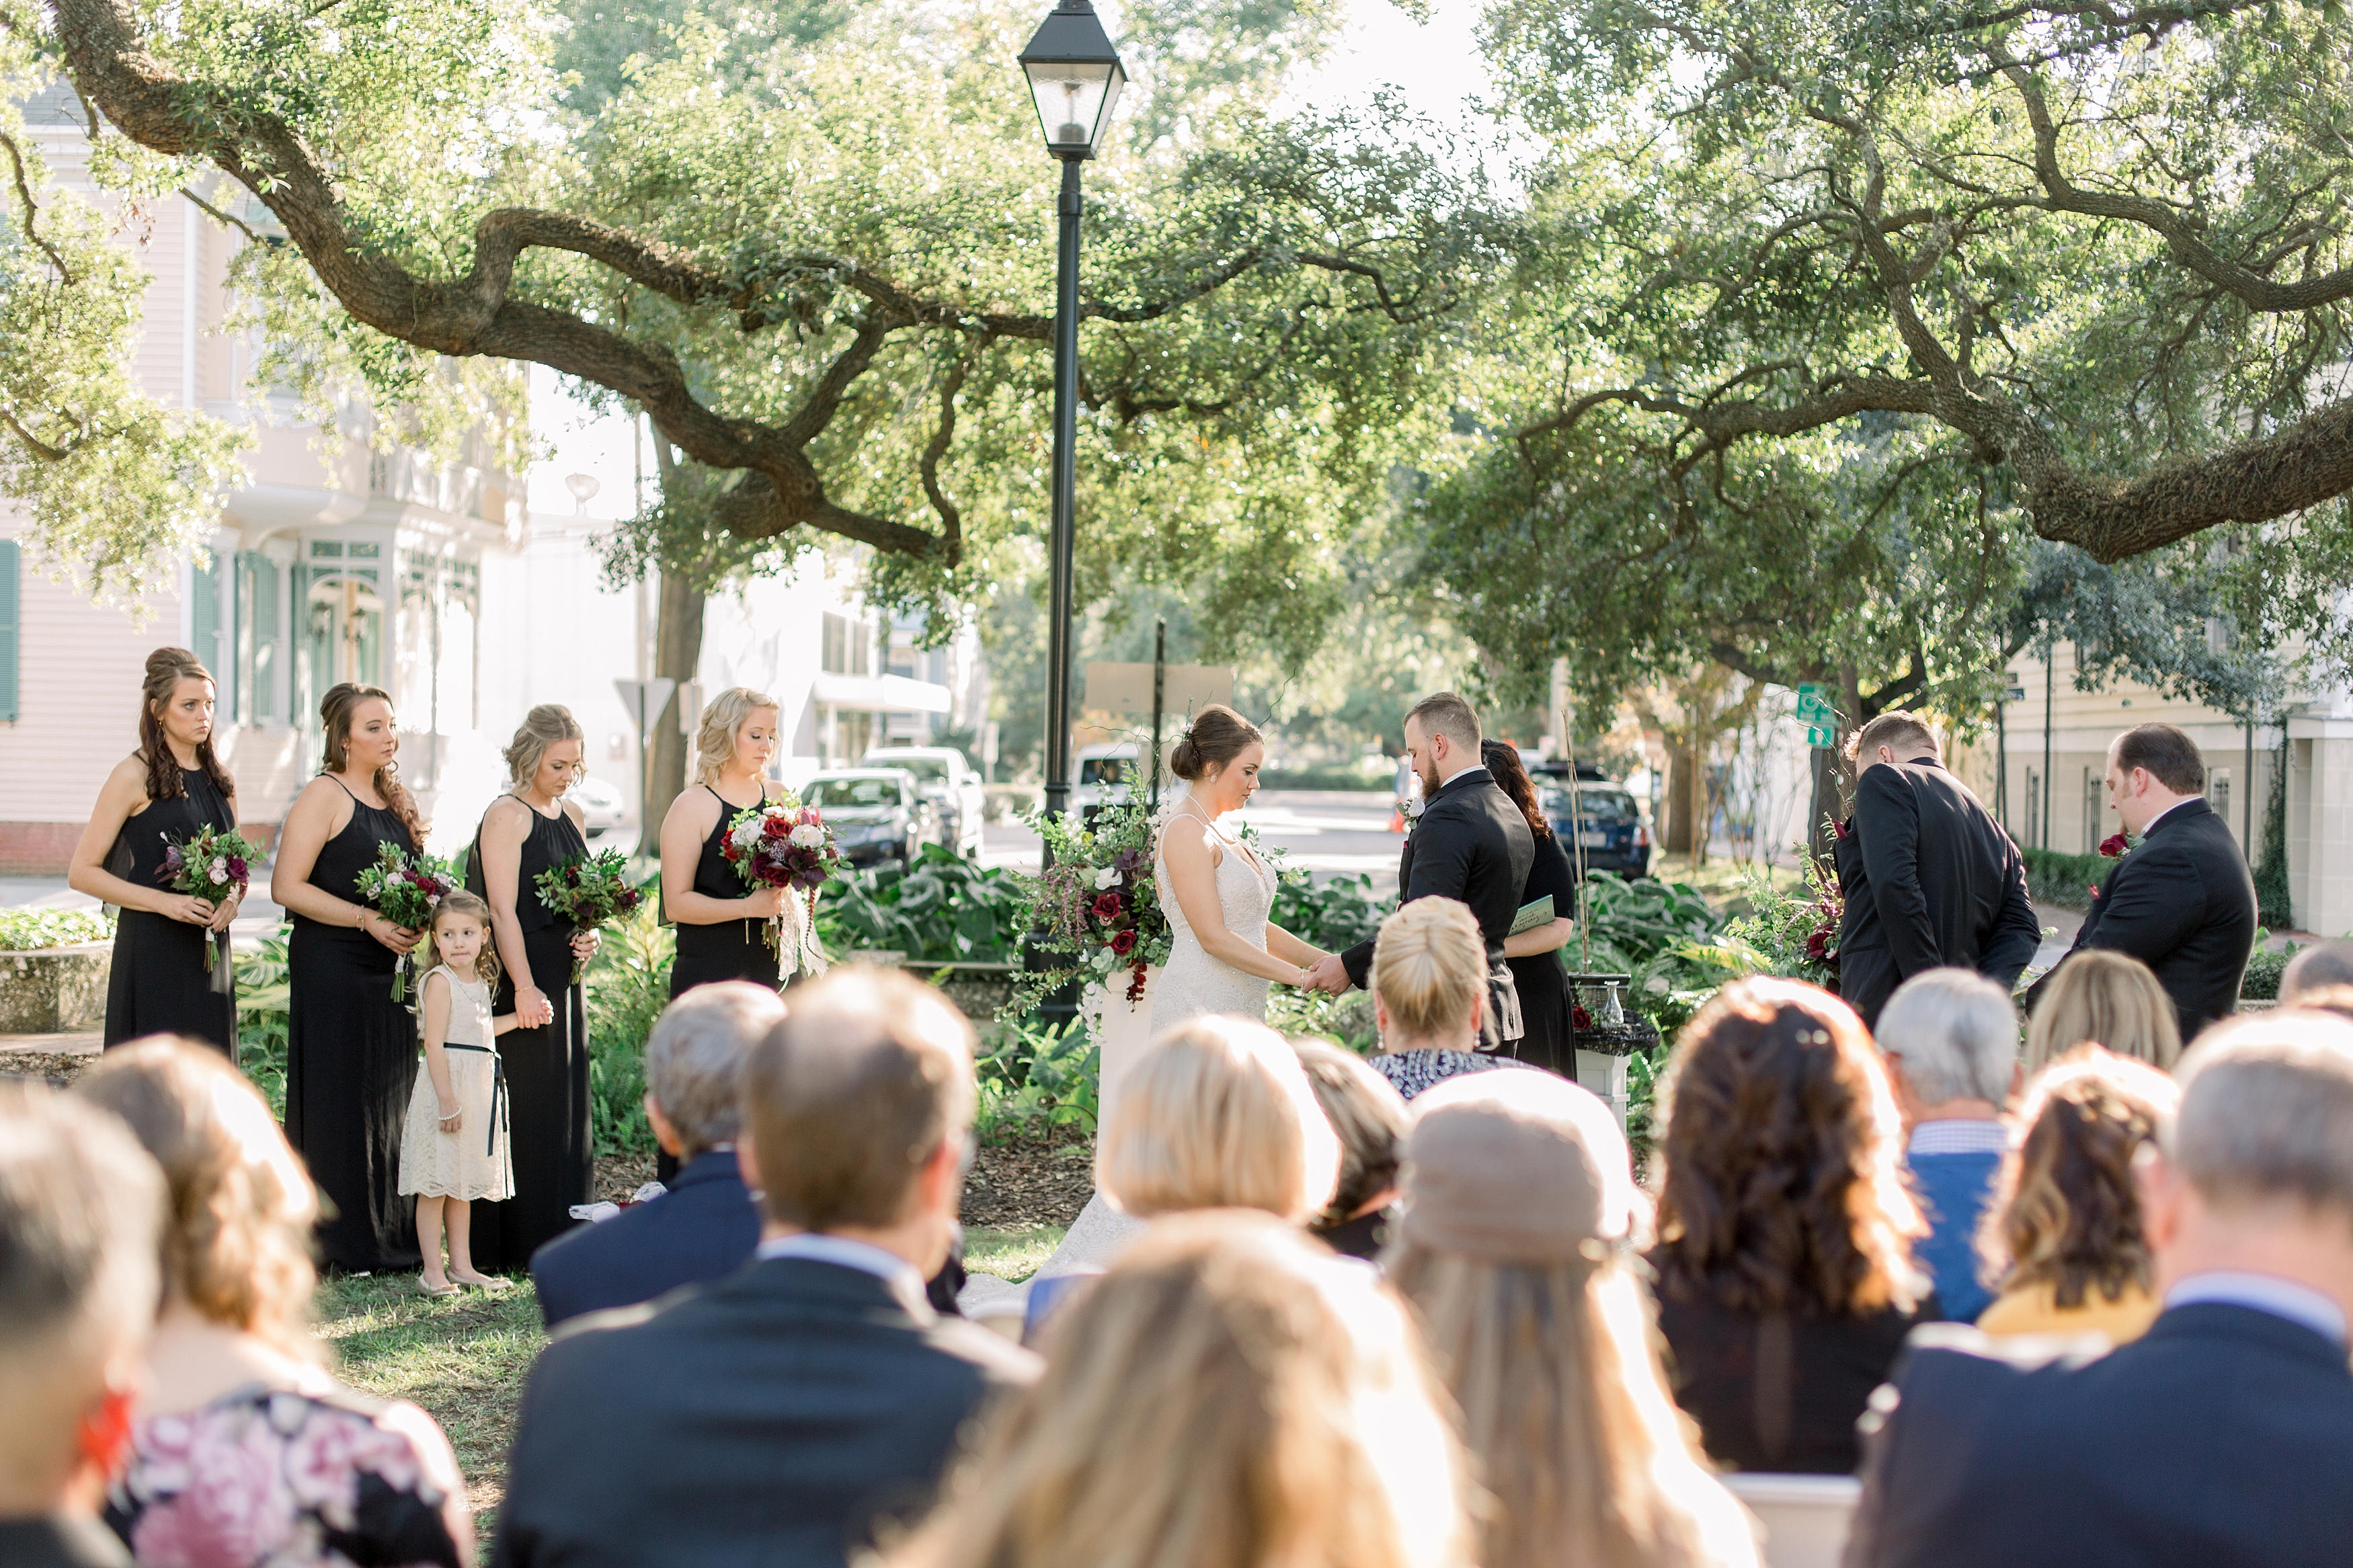 Warren Square wedding ceremony in Savannah, Georgia.